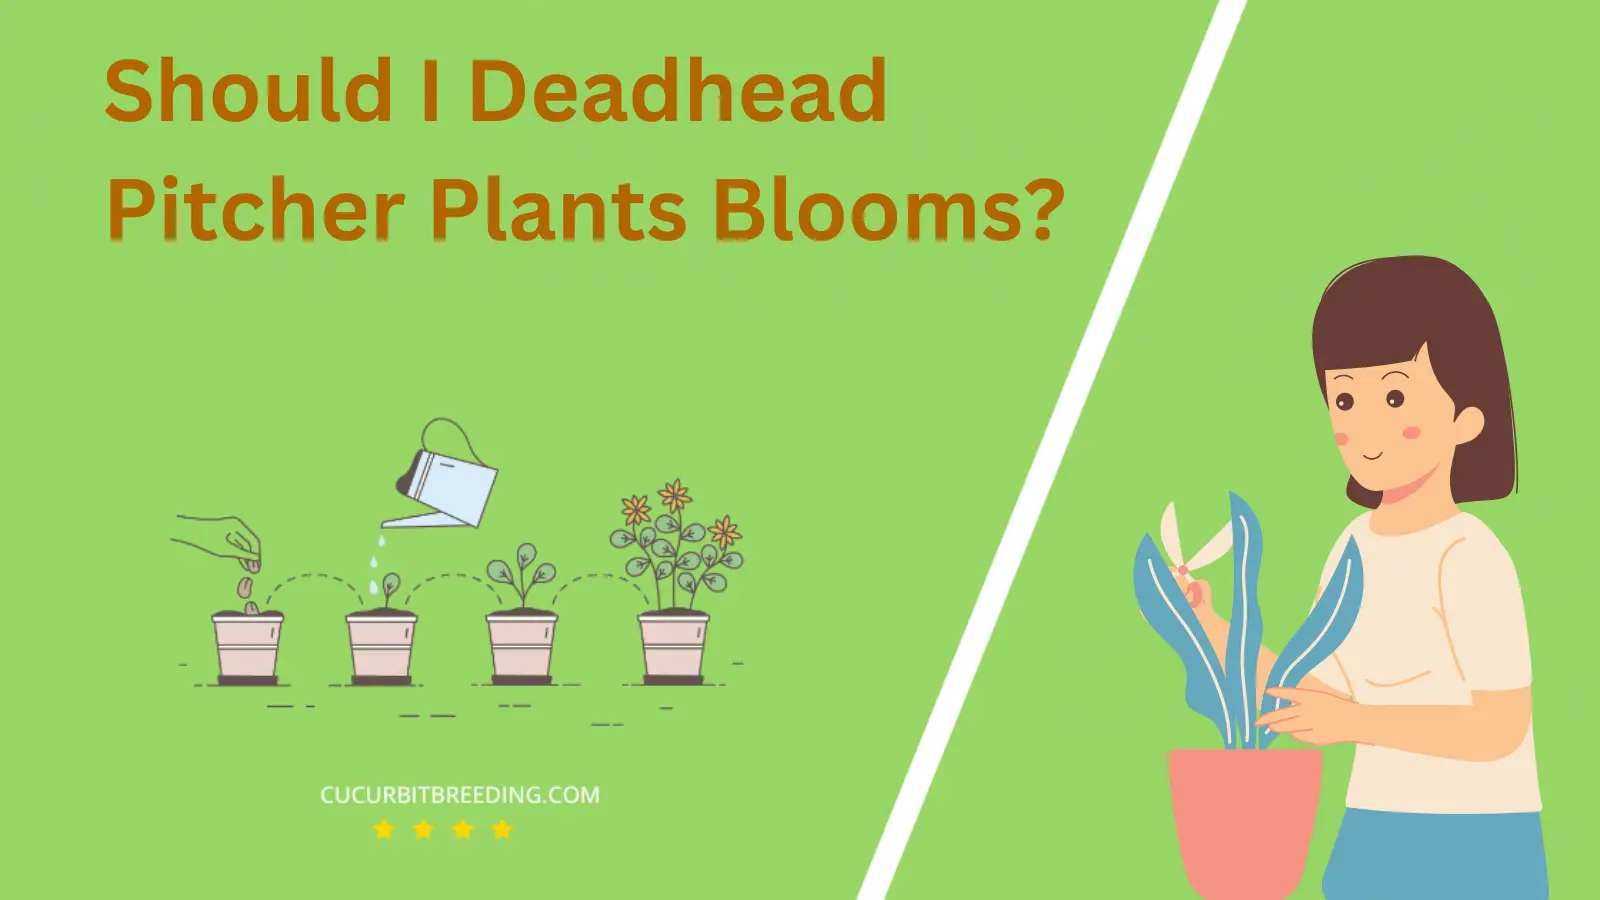 Should I Deadhead Pitcher Plants Blooms?